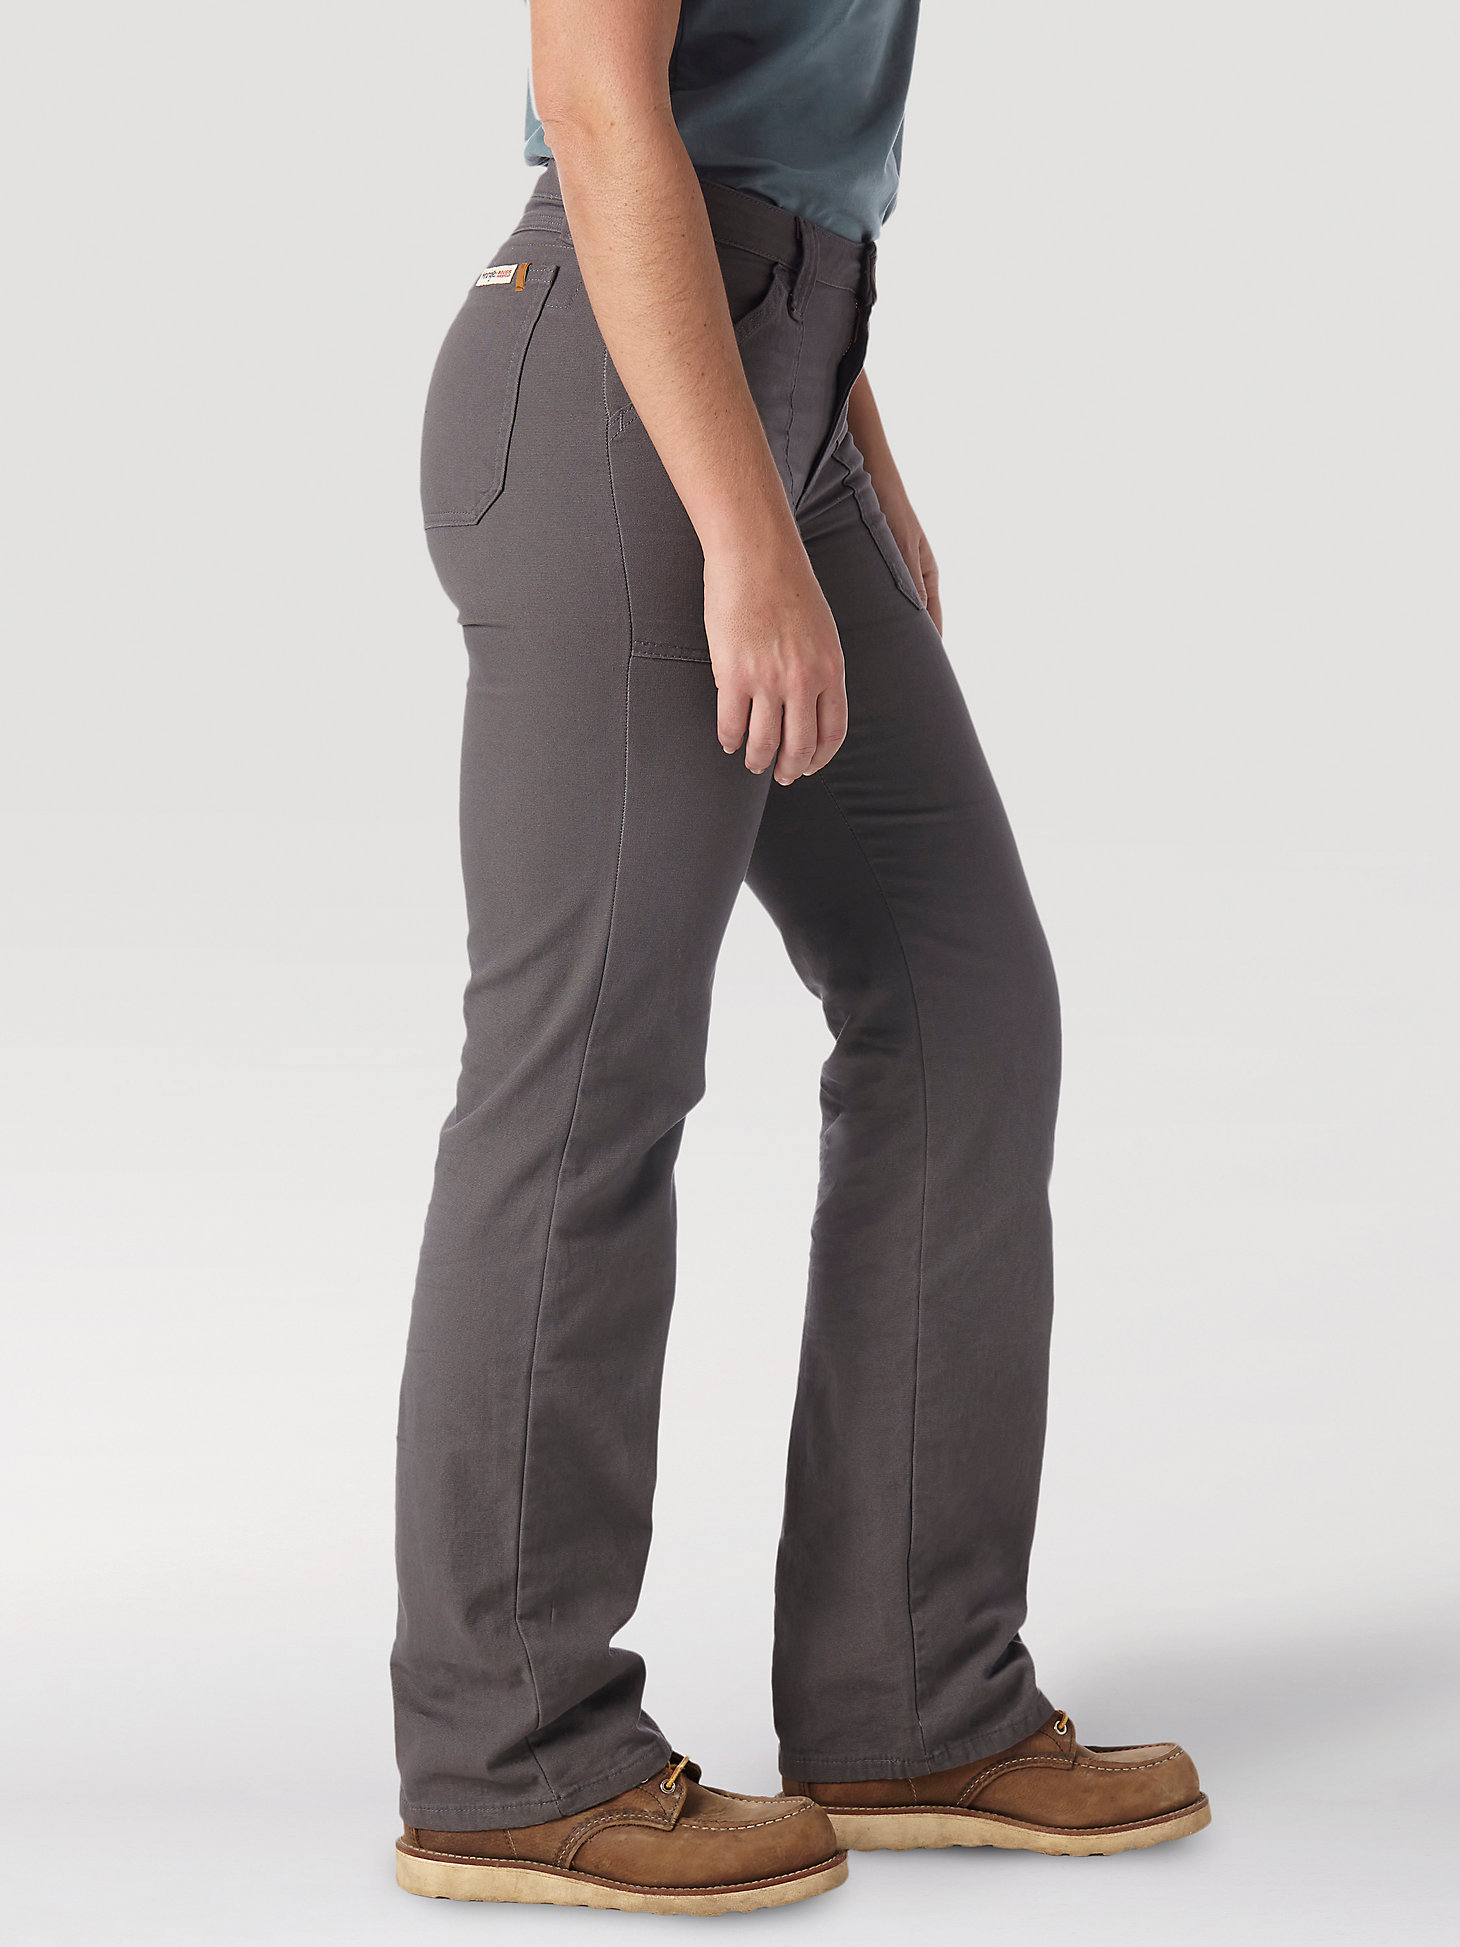 Black Sizes 8 10 12 14 Grey New Women's Utility Cargo Work Trousers 